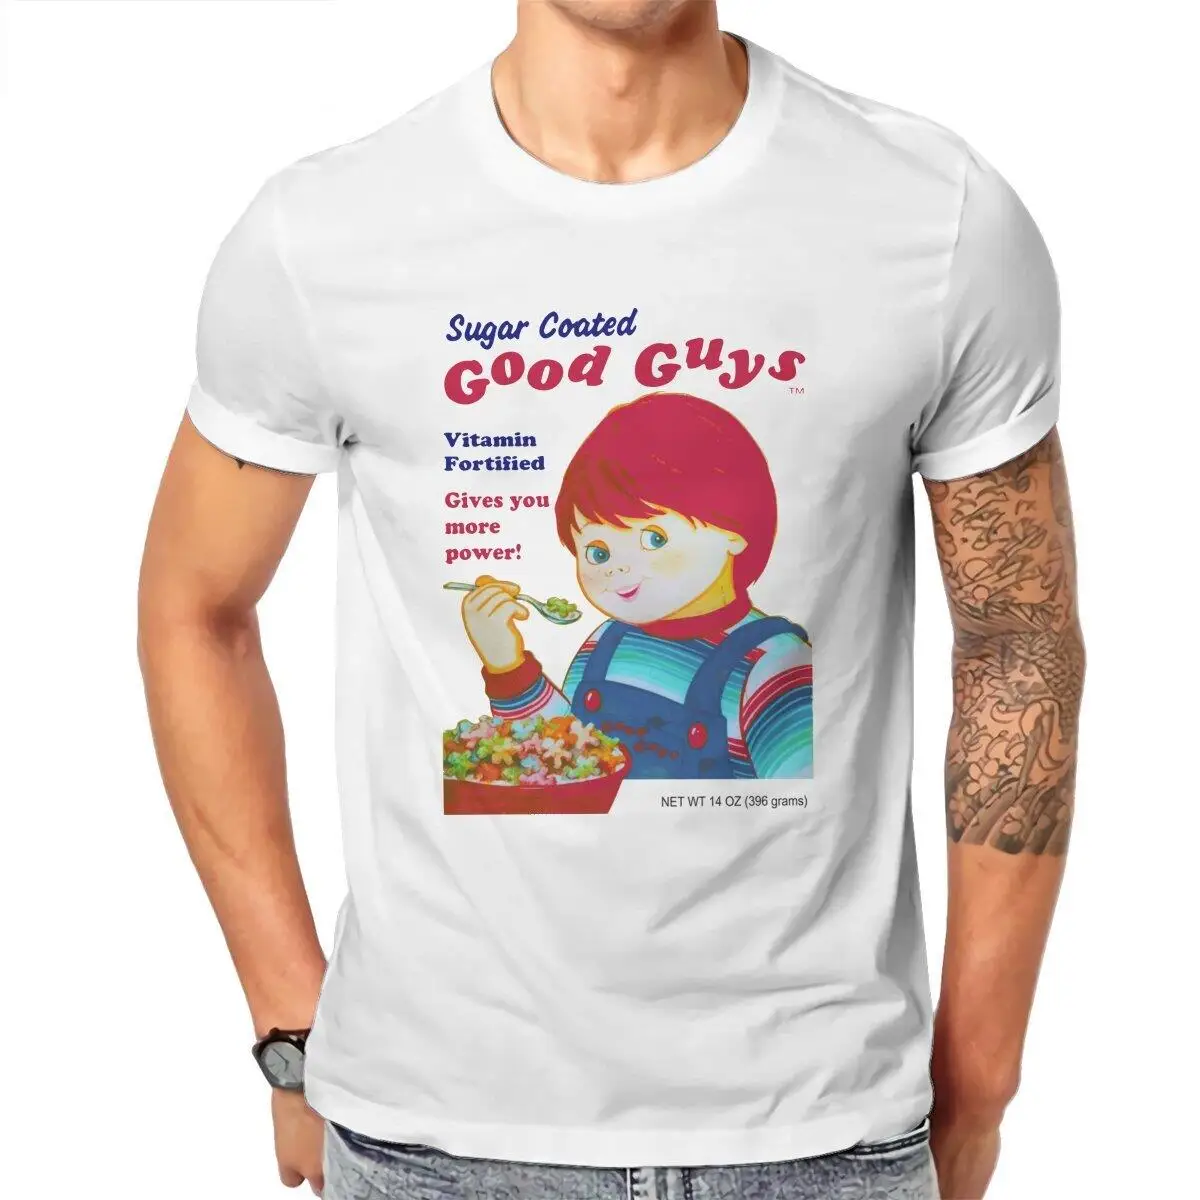 Men's T-Shirt Good Guys Cereal Chucky 100% Cotton Tee Shirt Short Sleeve Horror Doll T Shirt Round Collar Clothes Gift Idea